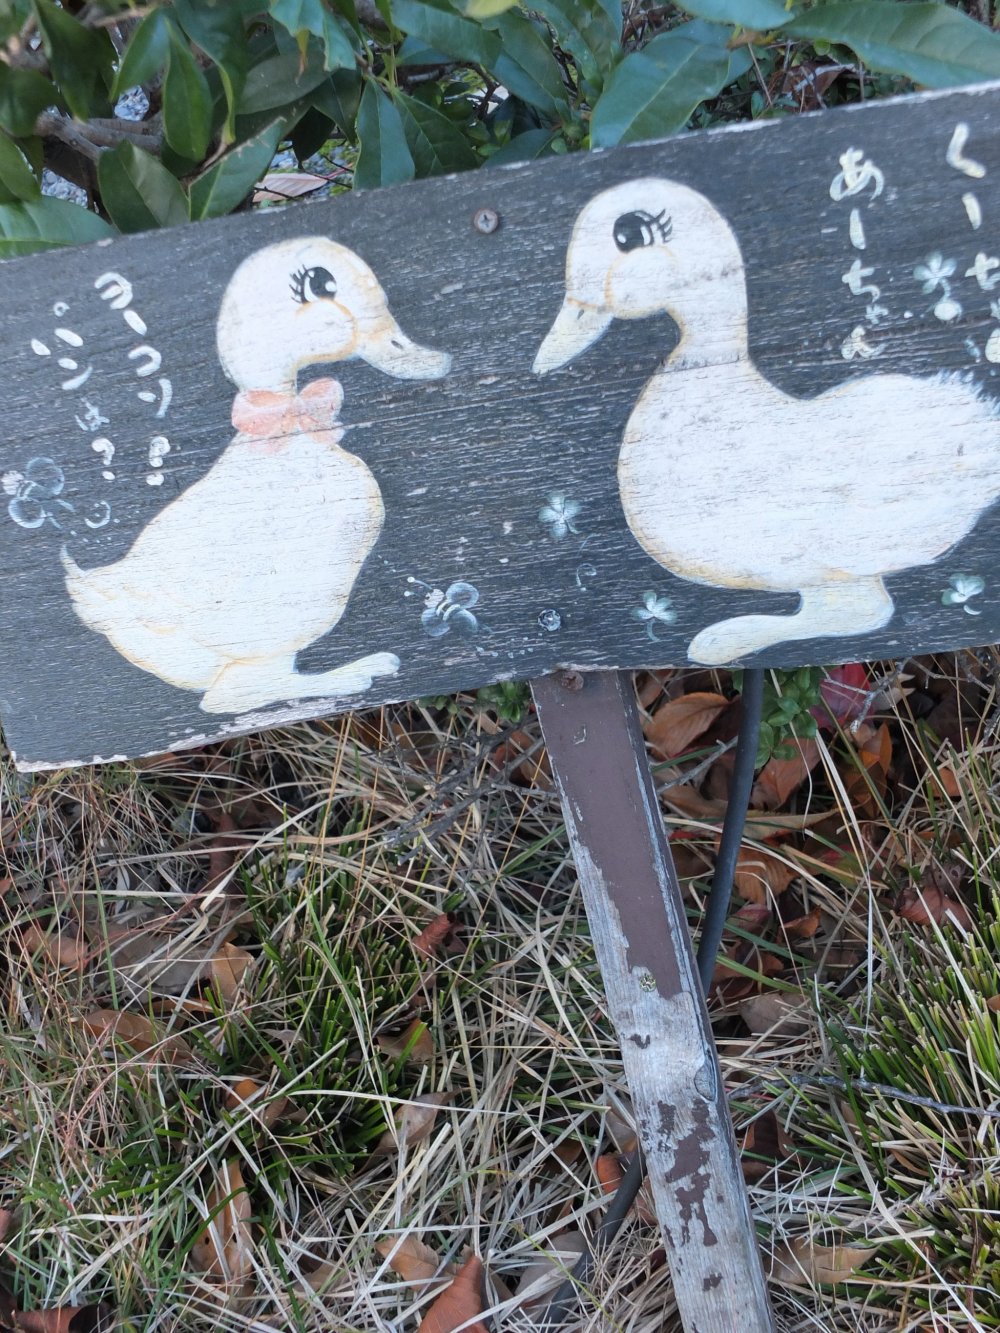 This garden has ducks!